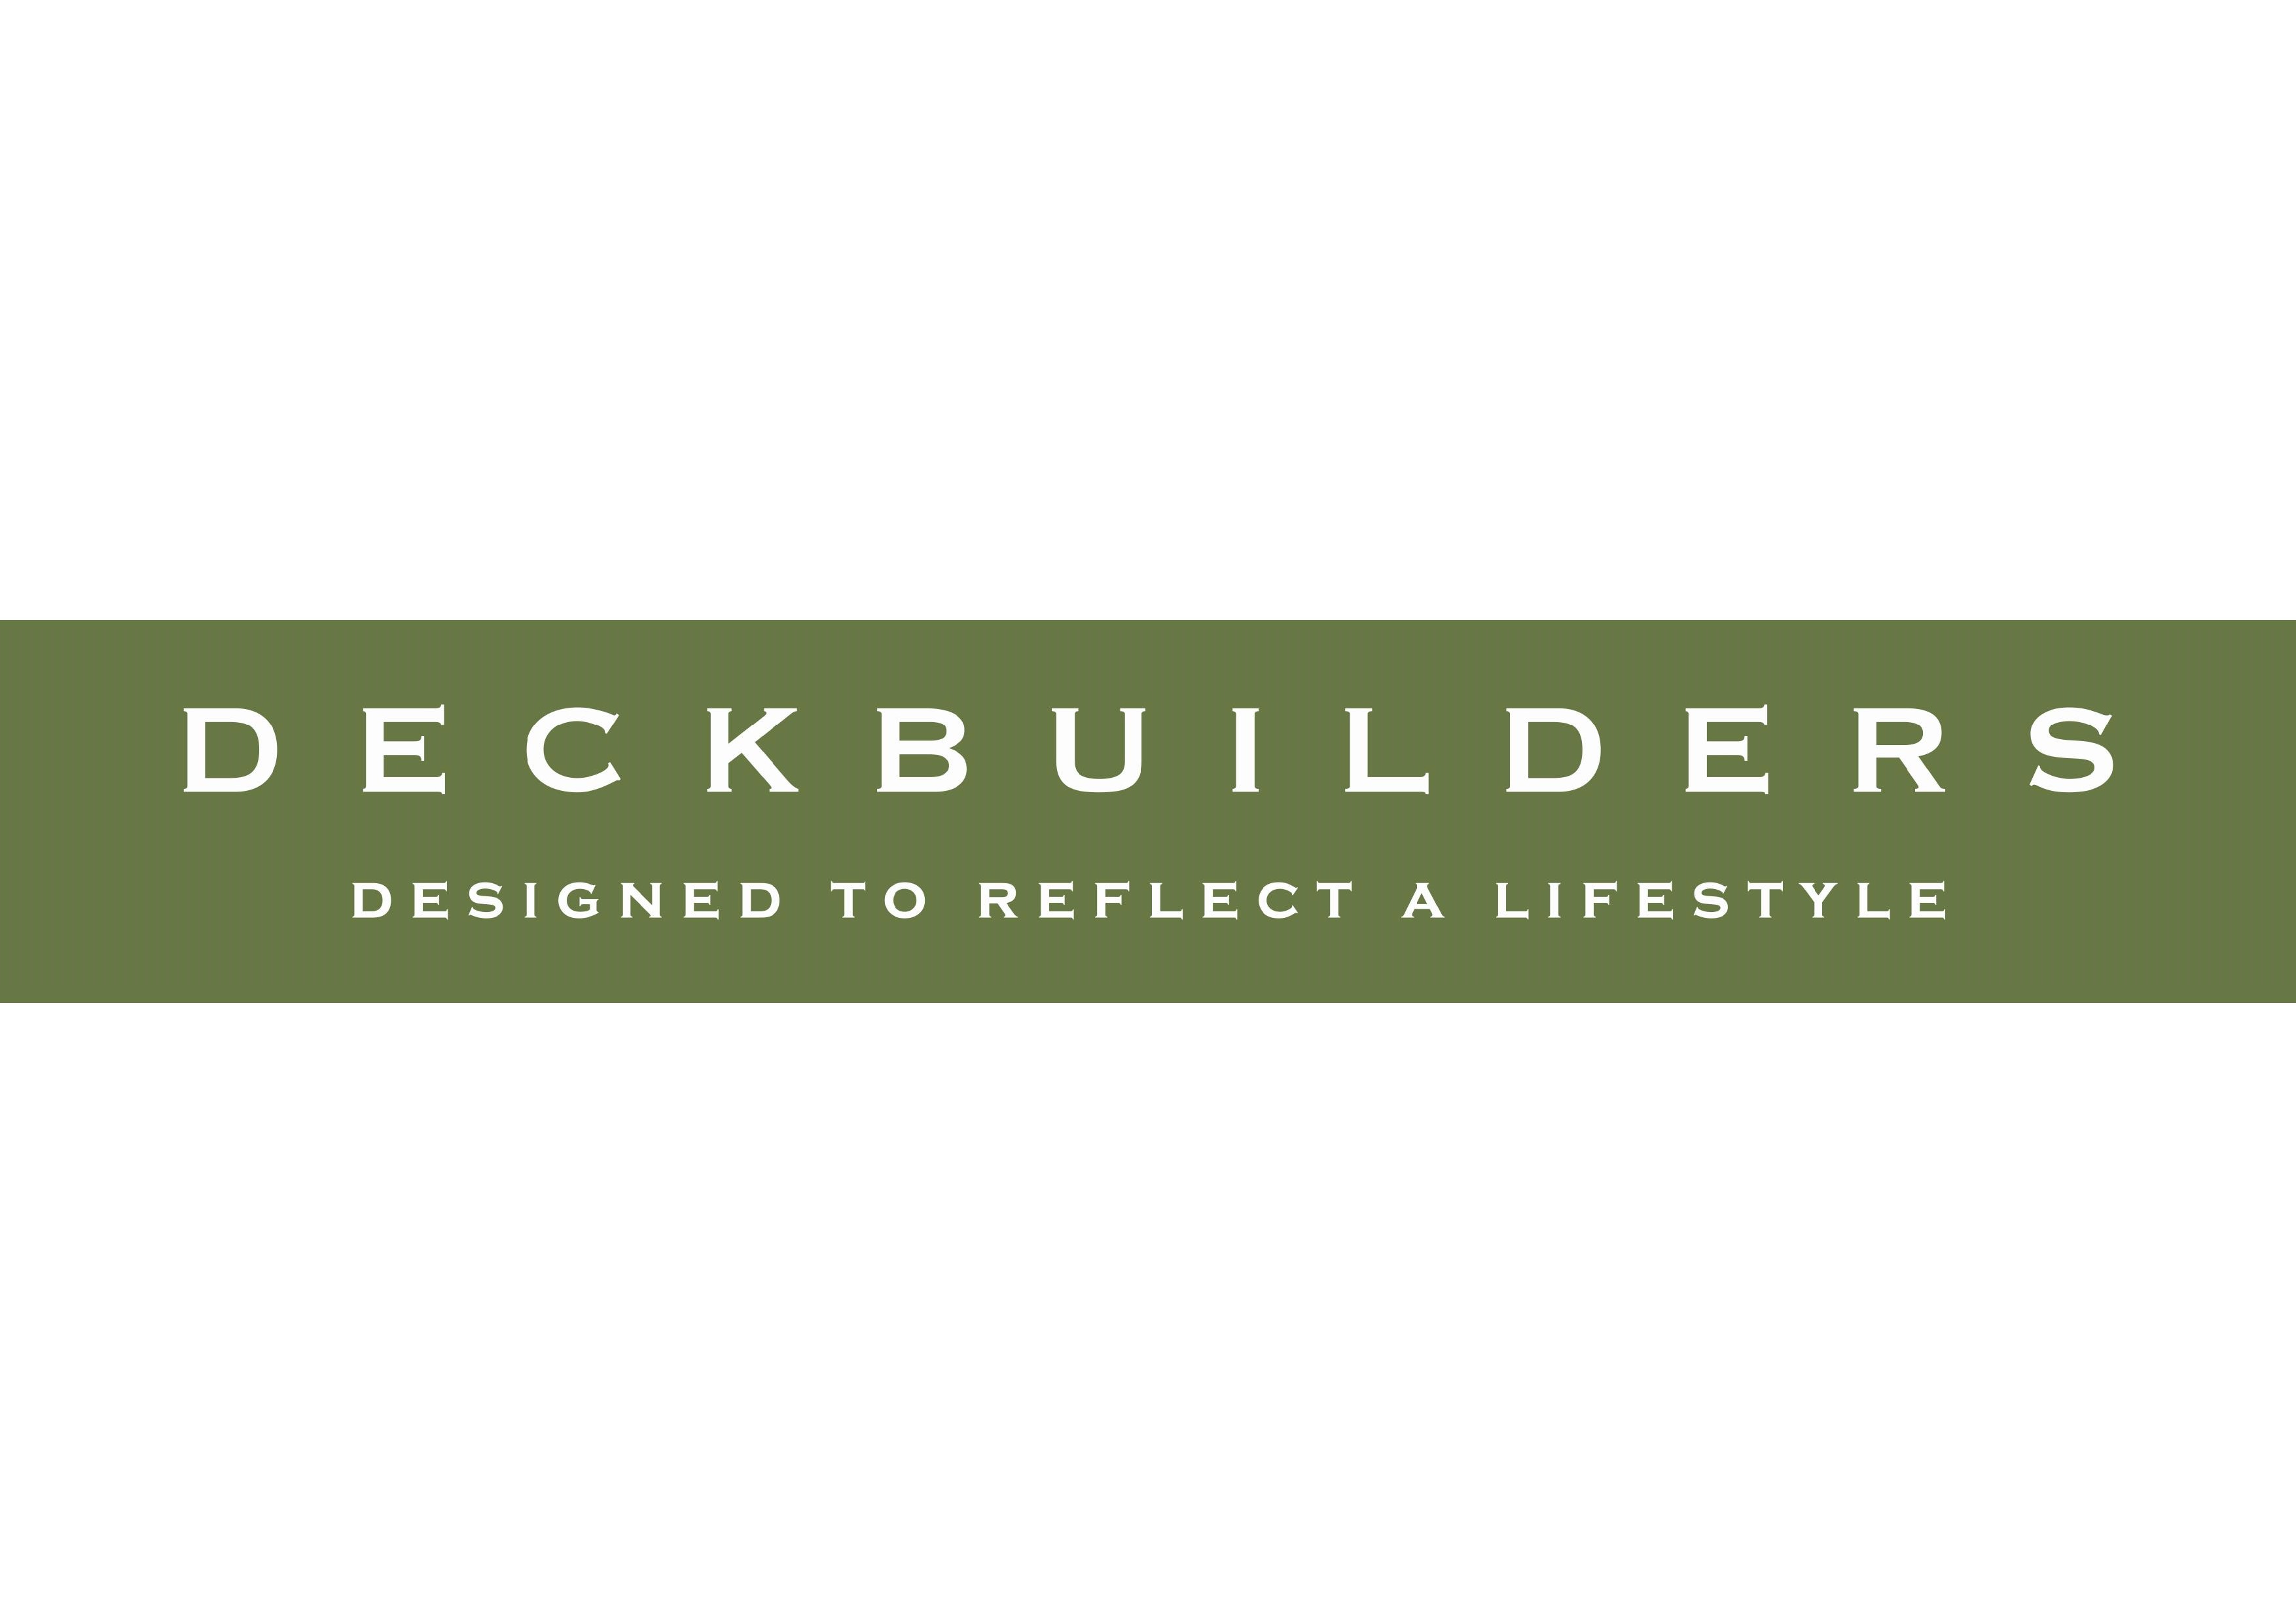 Deckbuilders Decking Quality Control Audit